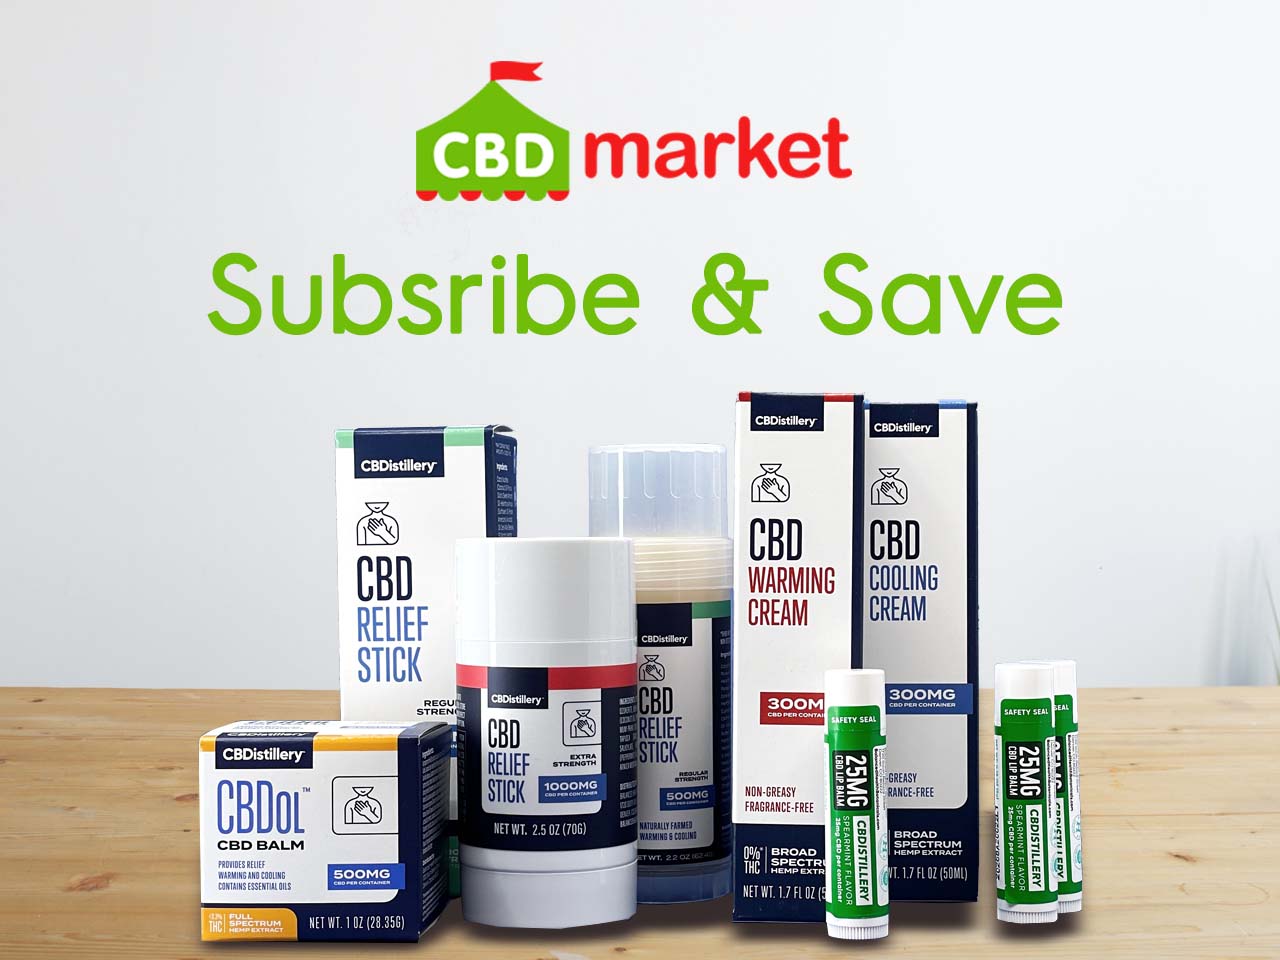 CBD.market CBD Online Store Announces CBD Subscription Service That Saves Customers Money